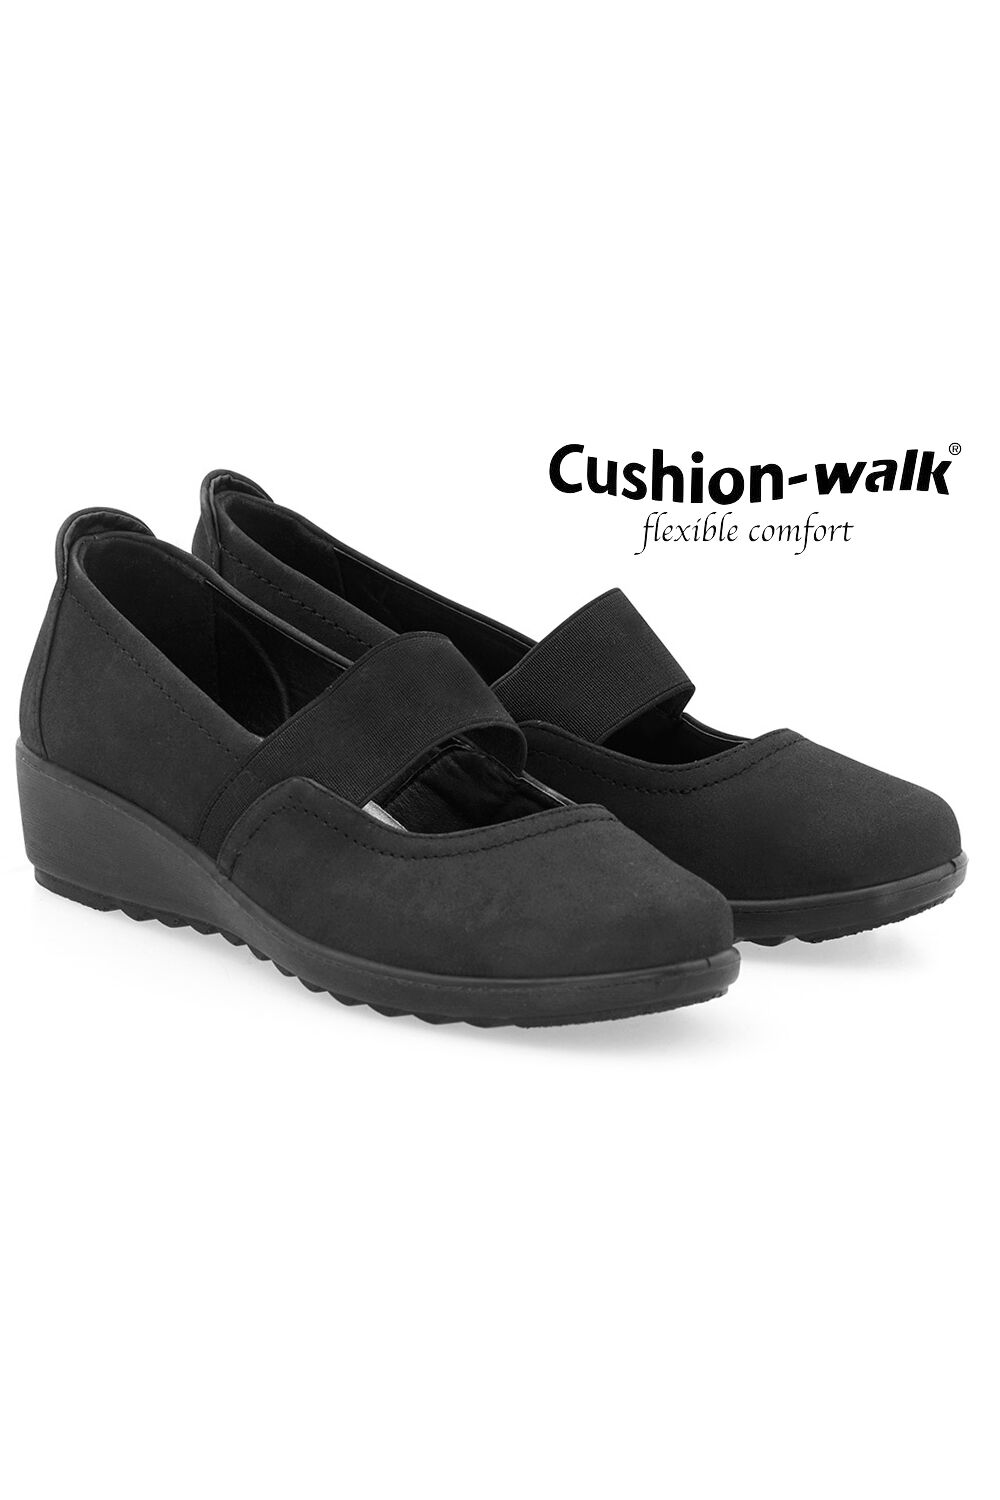 cushion walk mary jane shoes